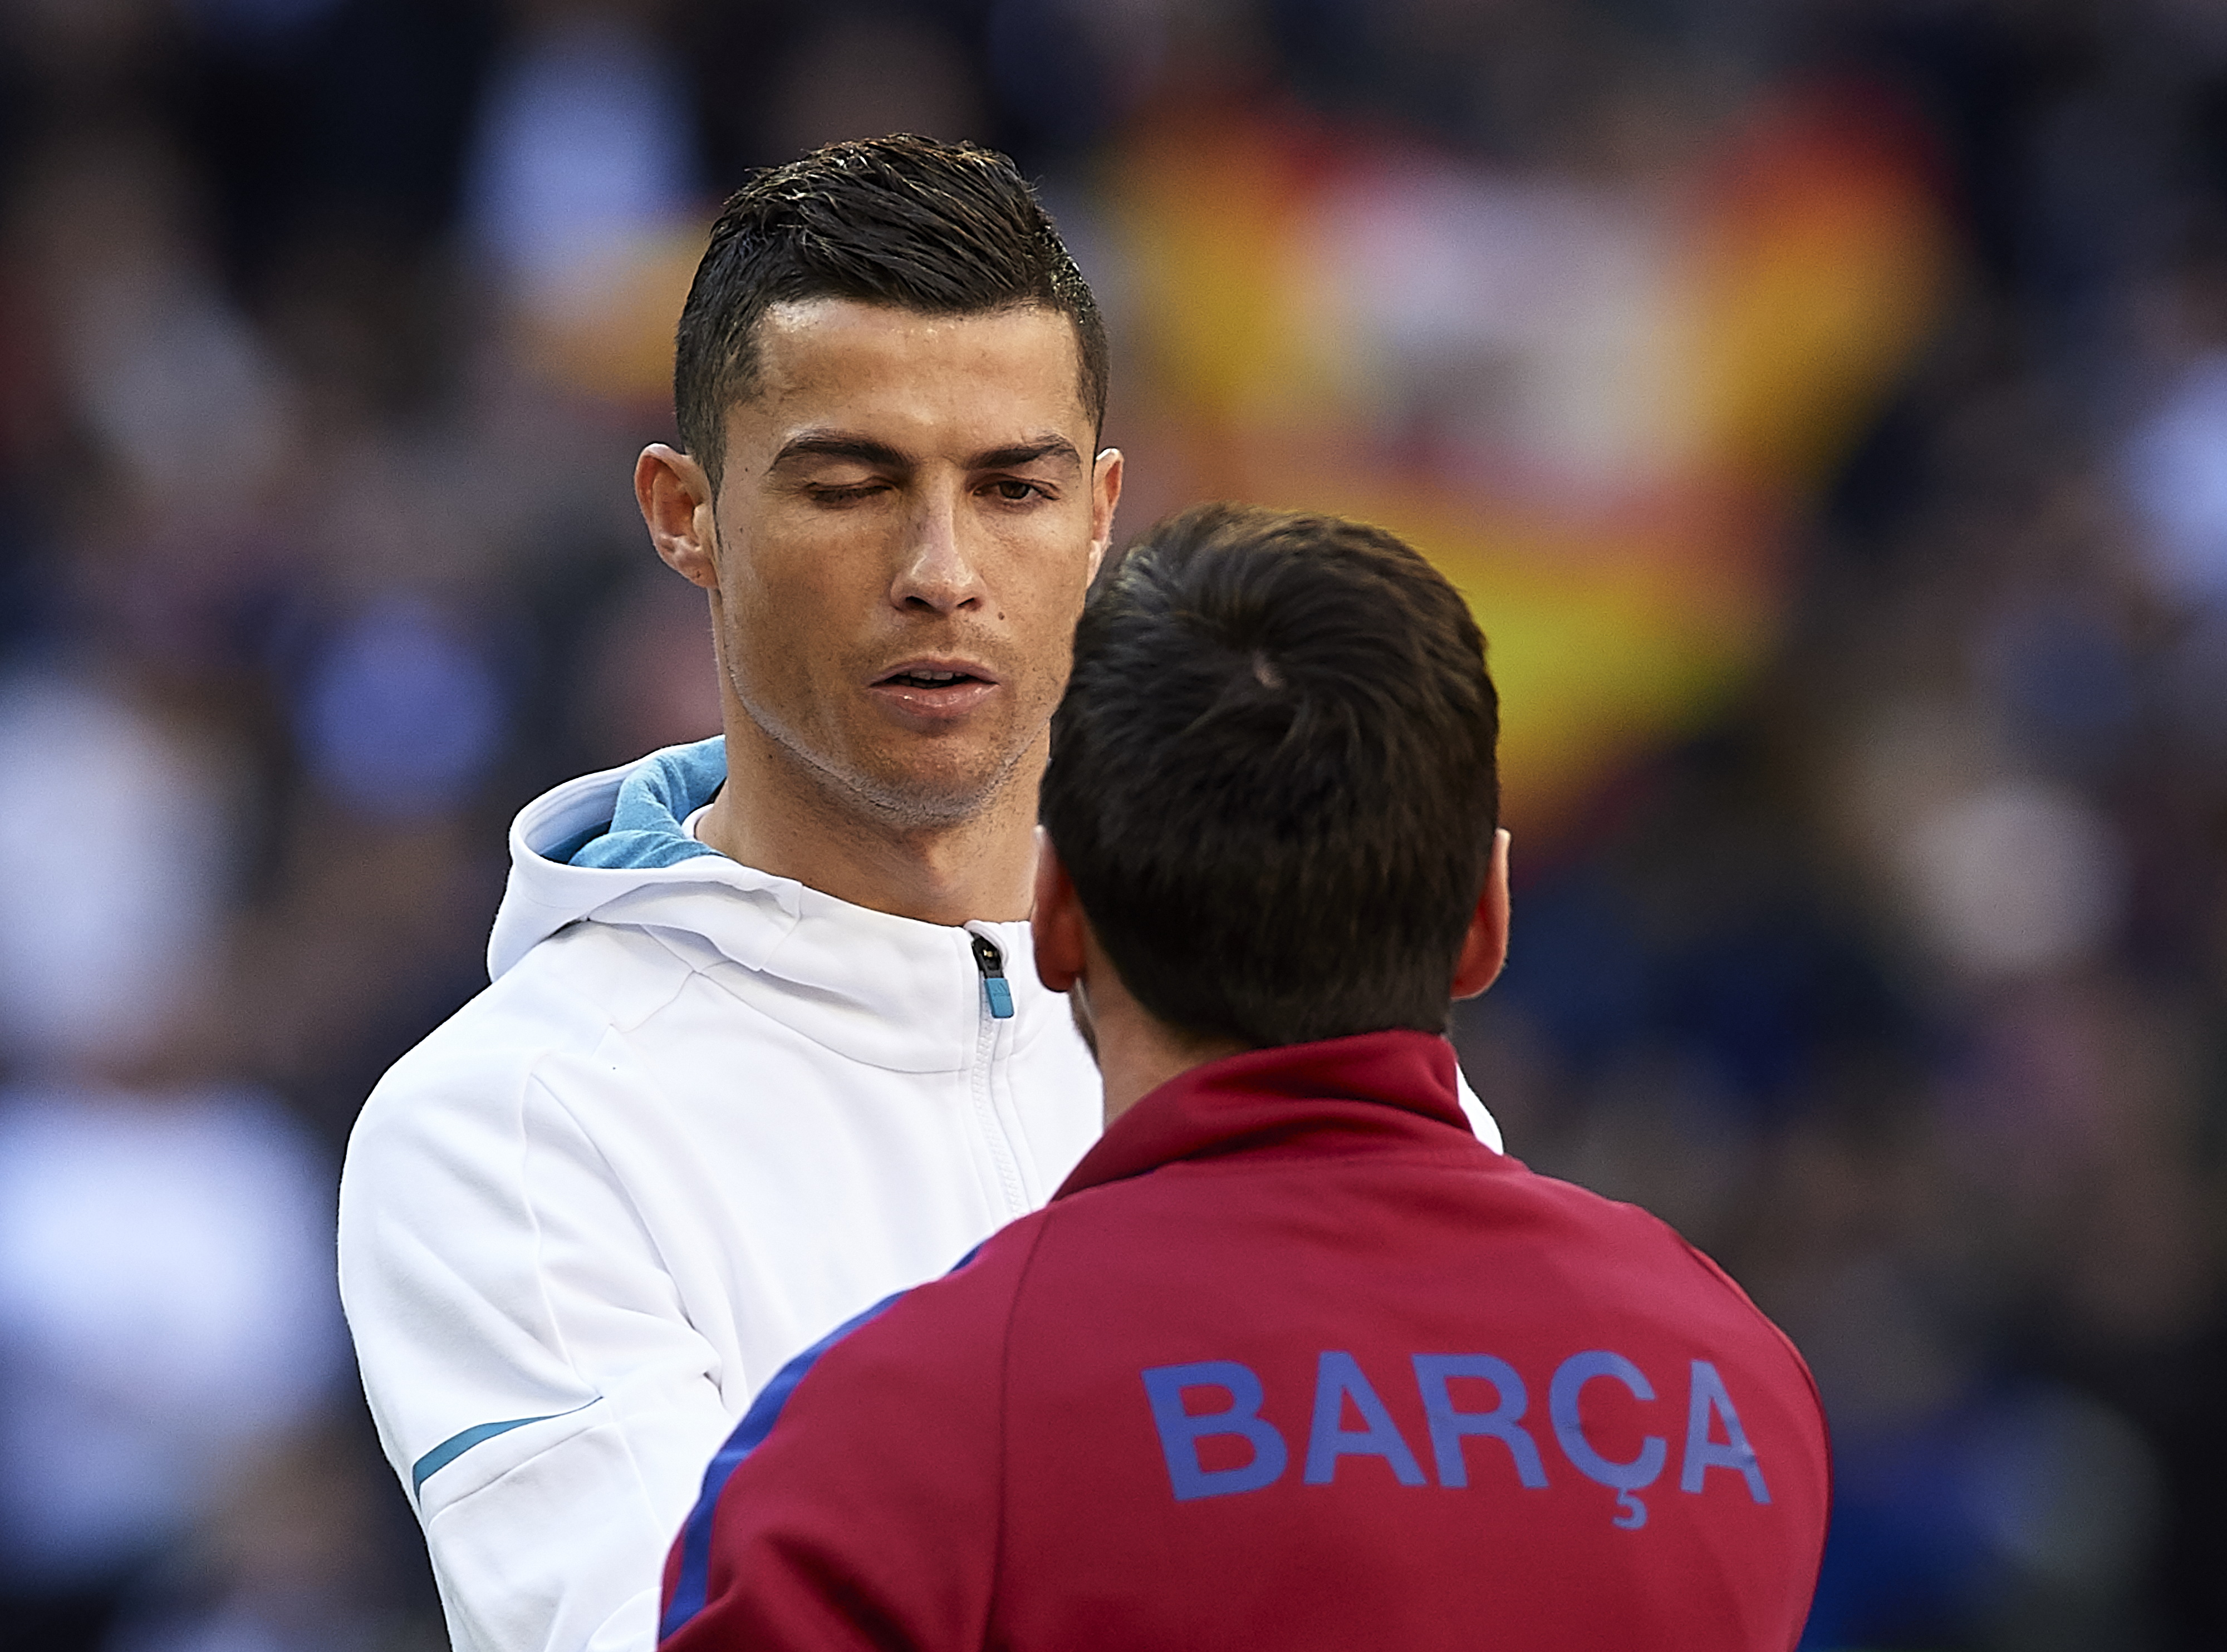 Último encontro? Os números dos confrontos entre Messi e Cristiano